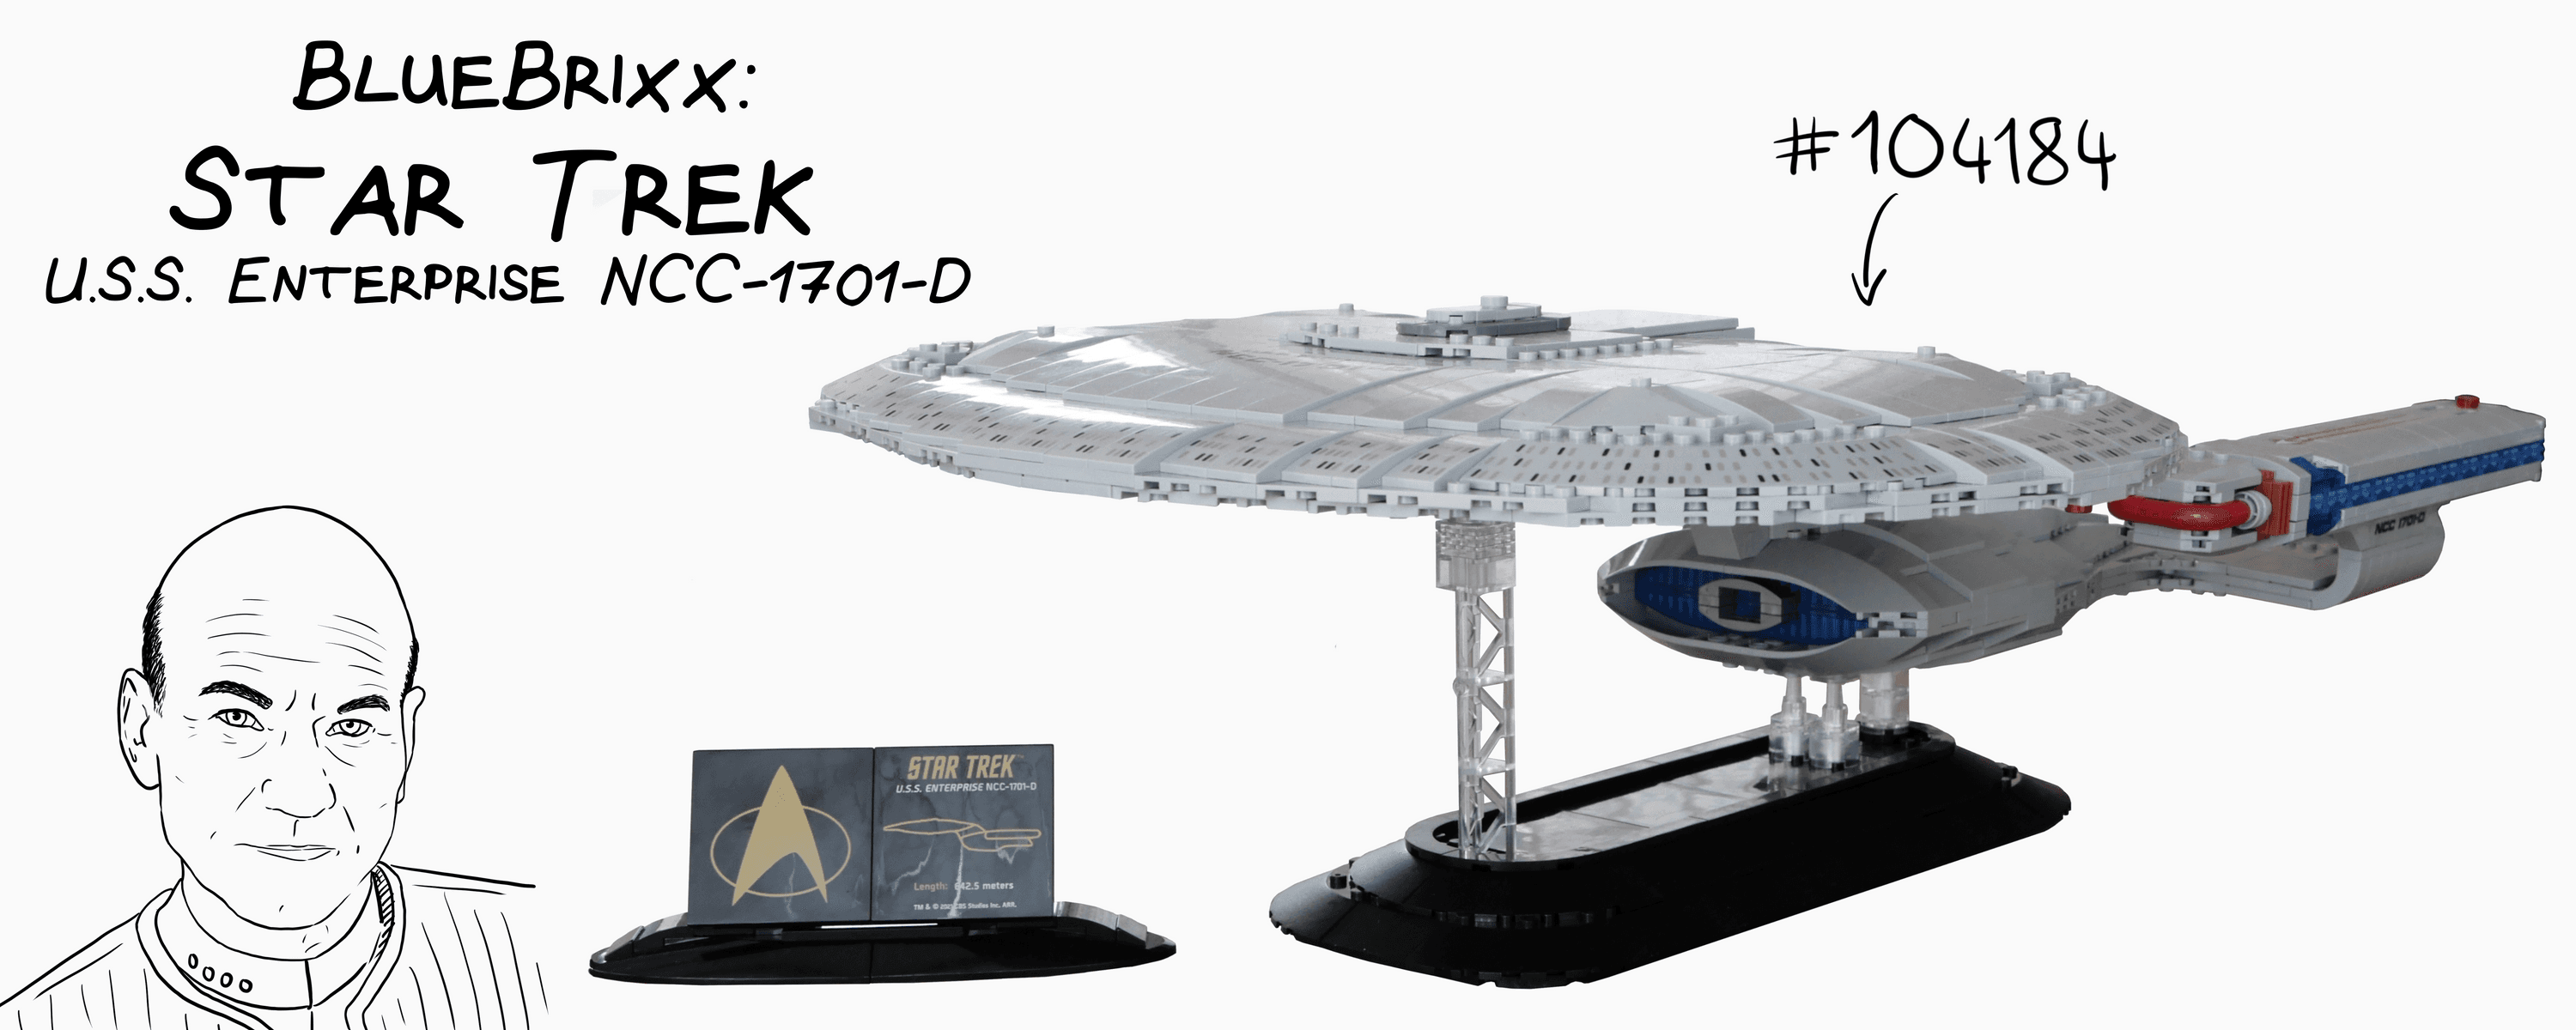 Blue Brixx - Star Trek USS Enterprise NCC-1701-D #104184